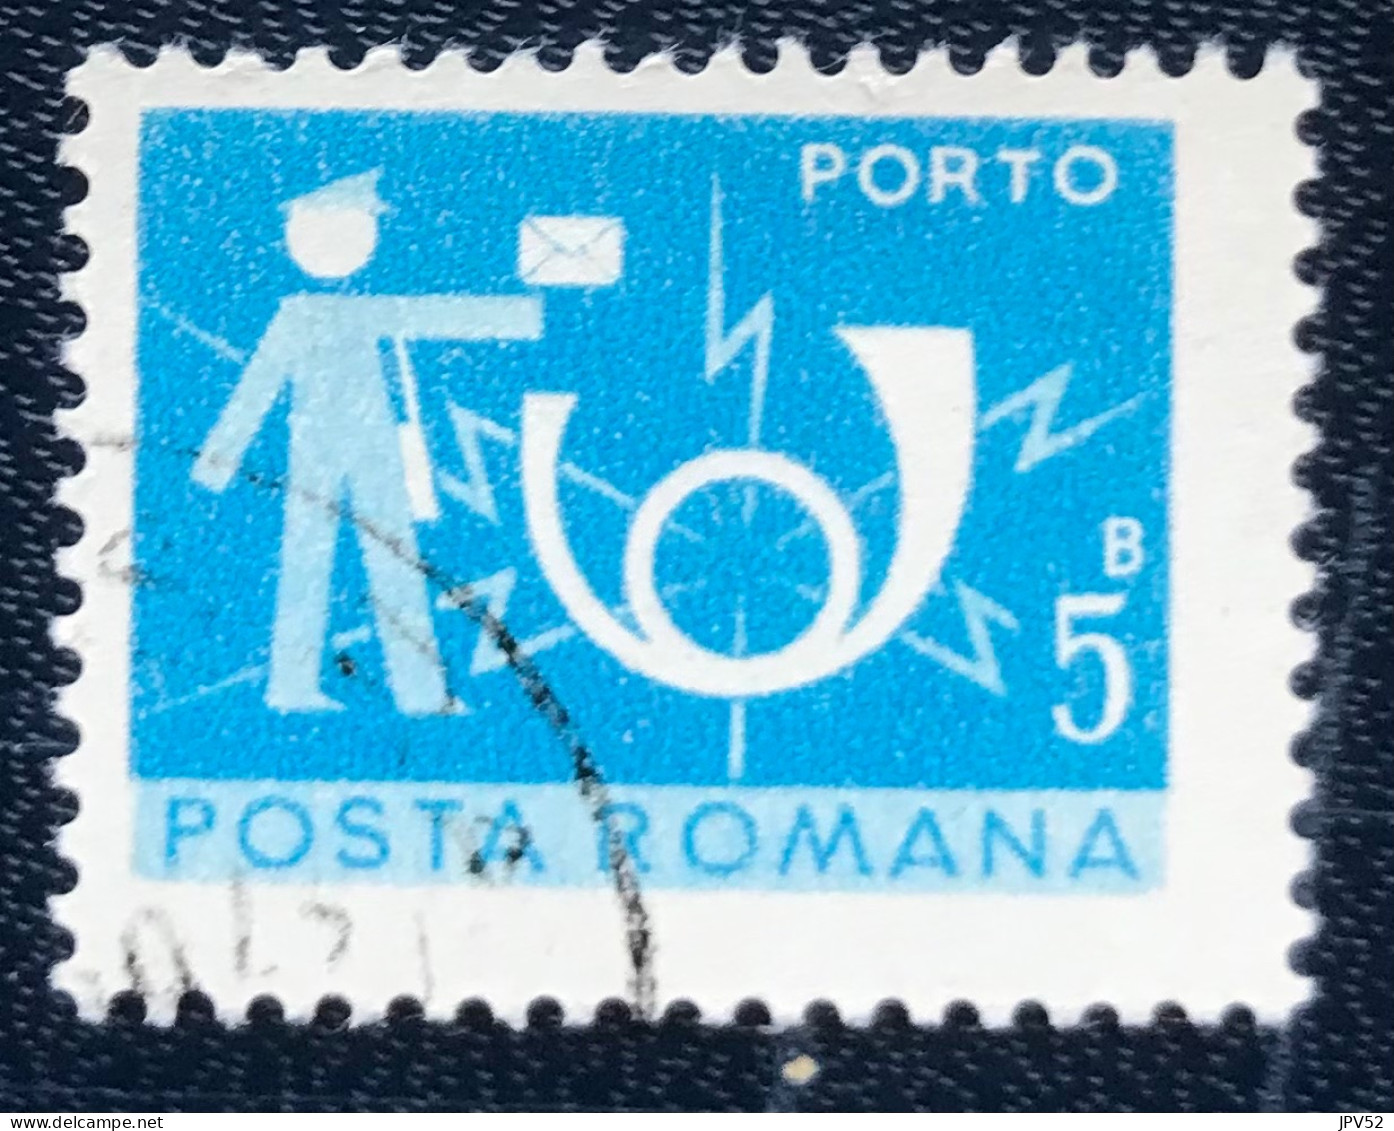 Romana - Roemenië - C14/54 - 1974 - (°)used - Michel 119 - Postbode & Posthoorn - Postage Due